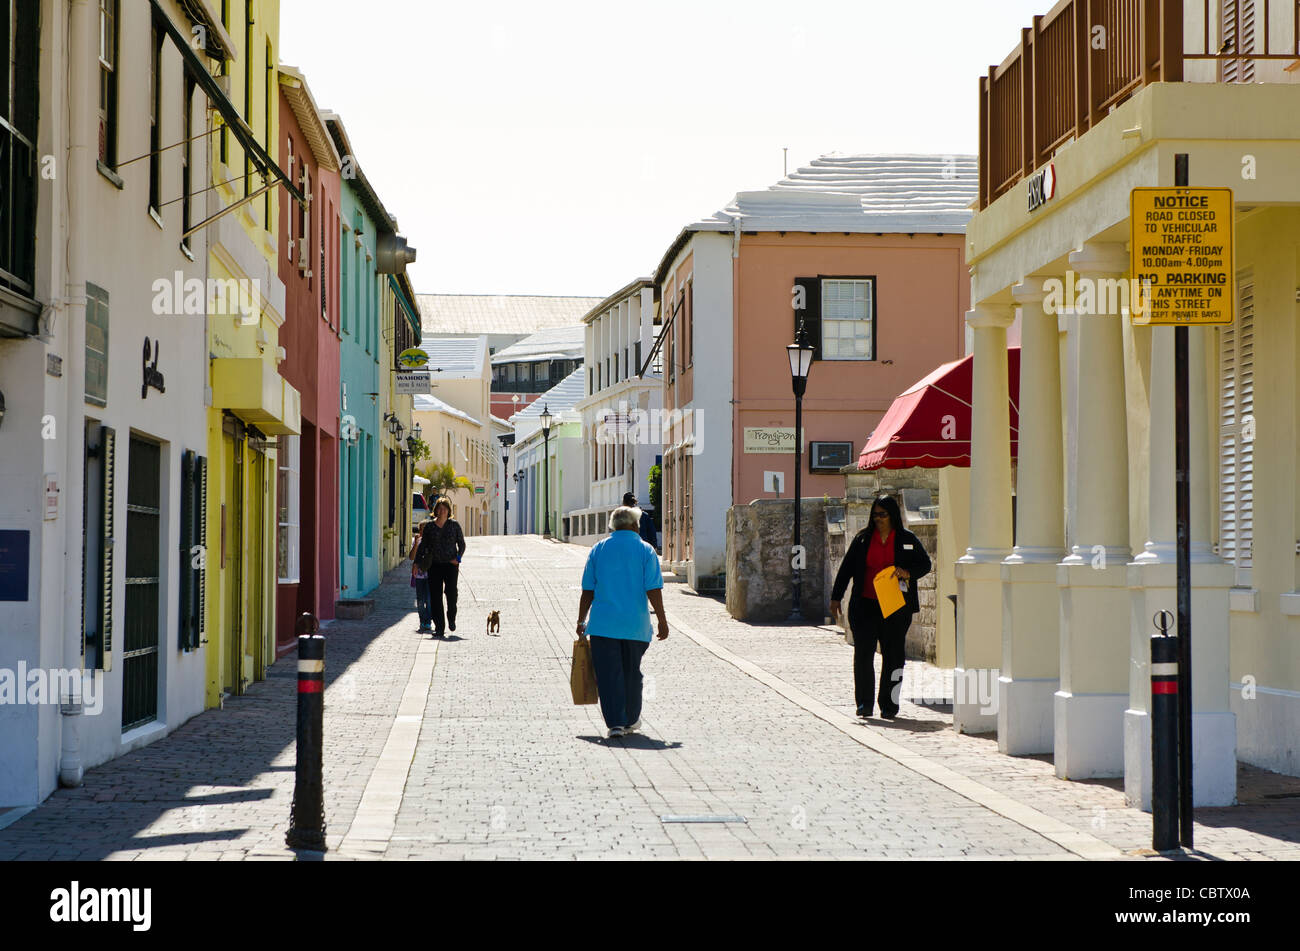 Downtown street in St. George, Bermuda. Stock Photo